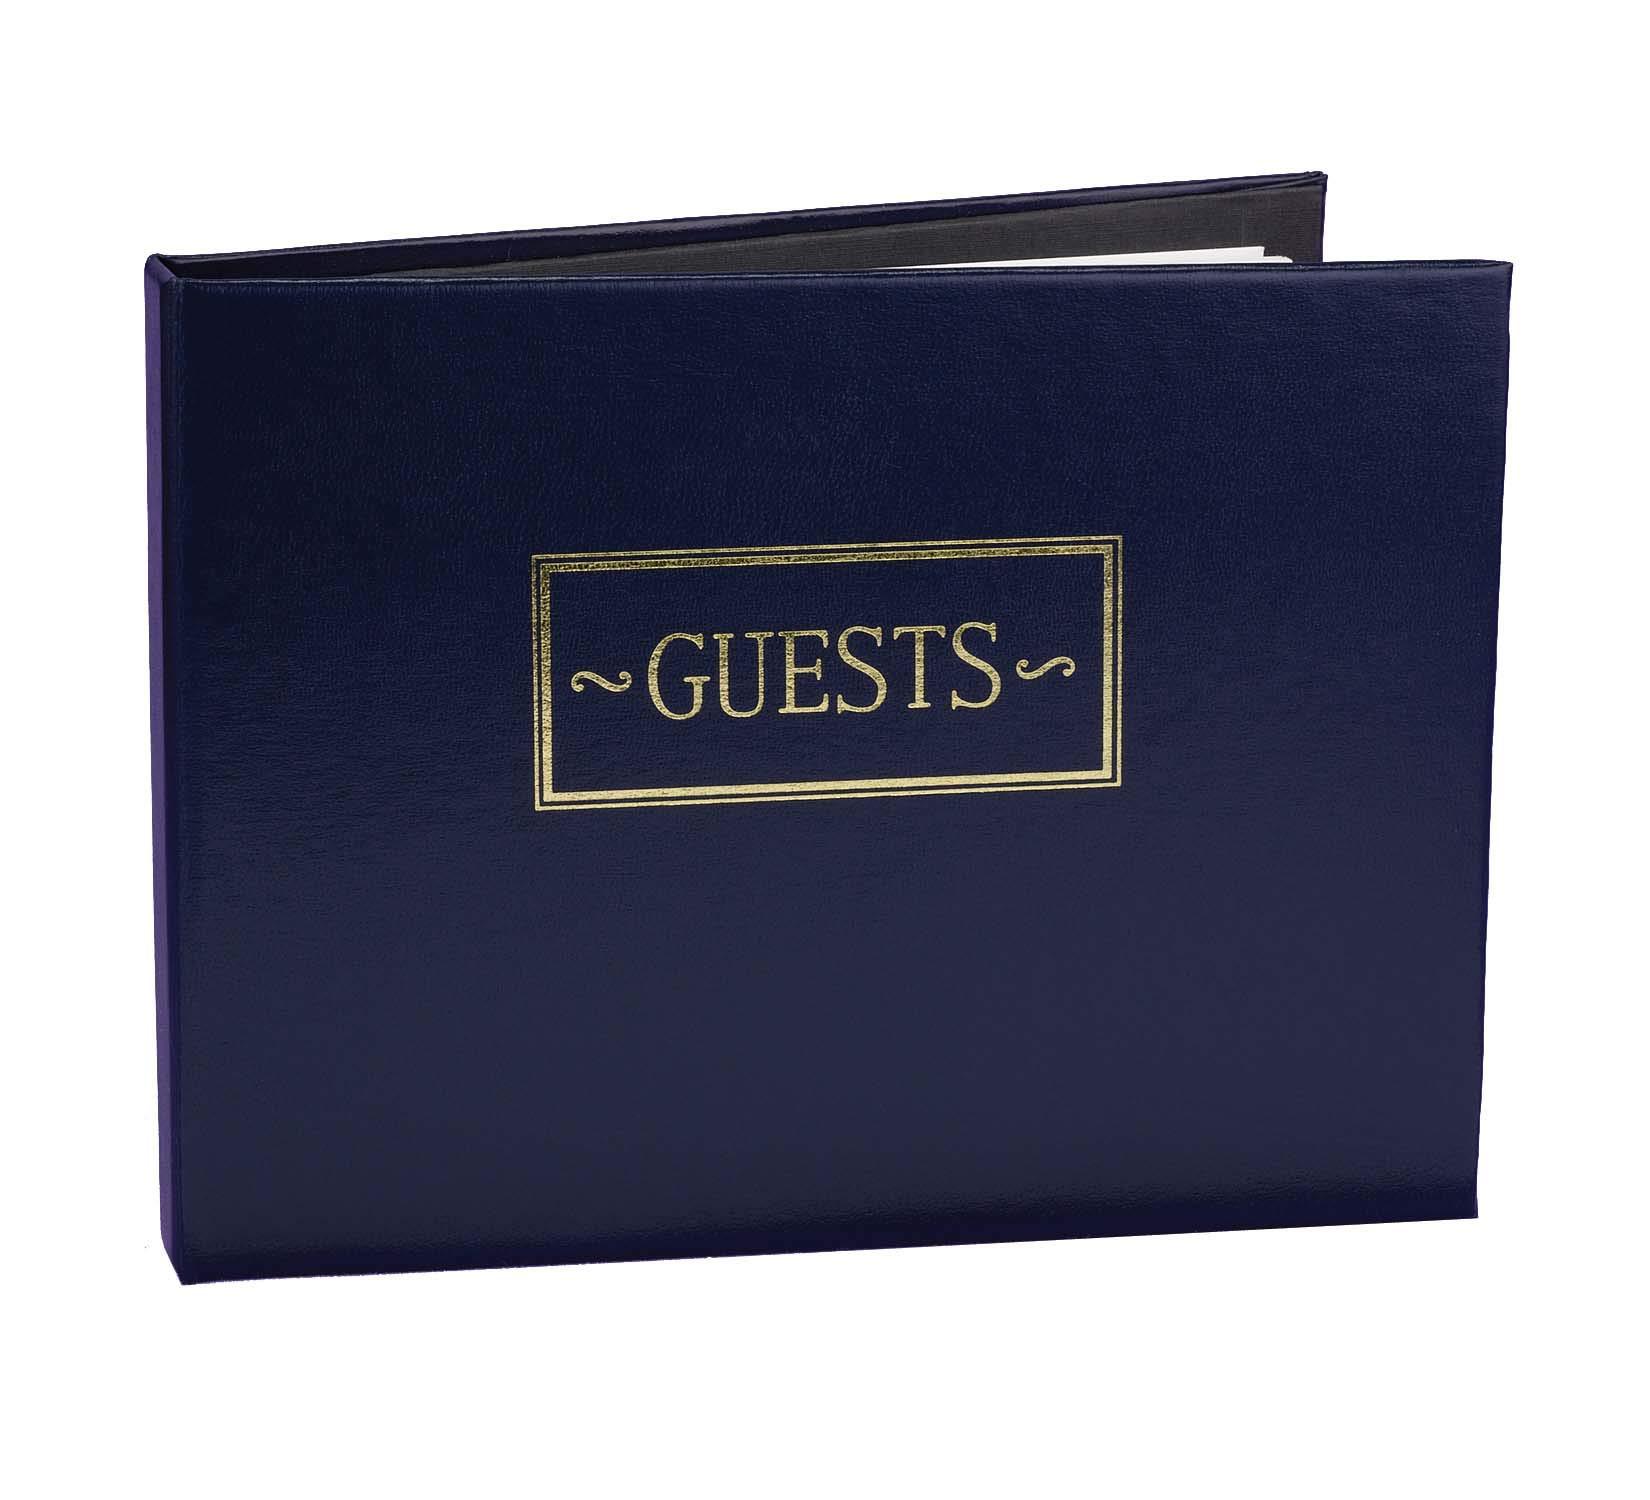 hortense b. hewitt wedding accessories guest book, navy, 7.5-inches x 5.75-inches